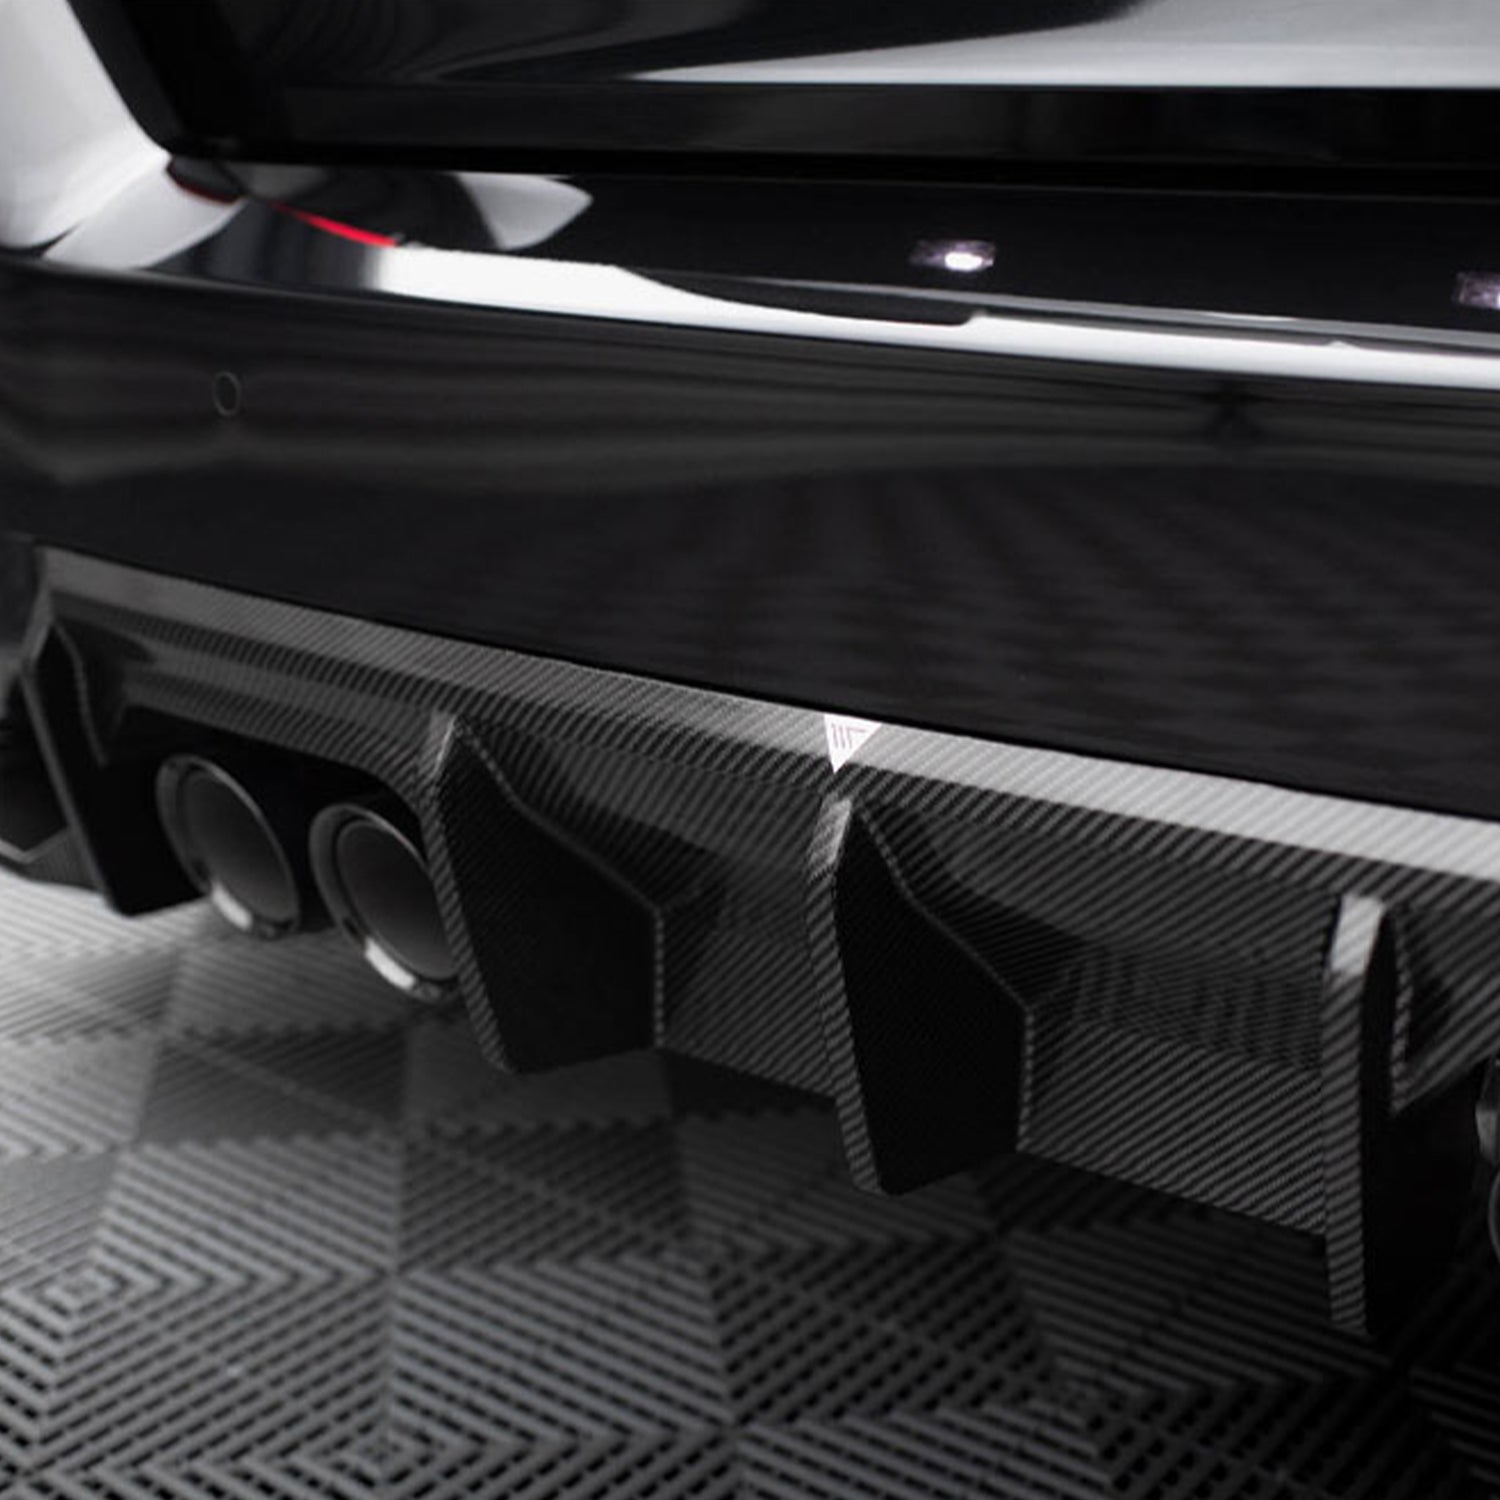 Maxton Design BMW G87 M2 Gloss Carbon Fibre Rear Diffuser